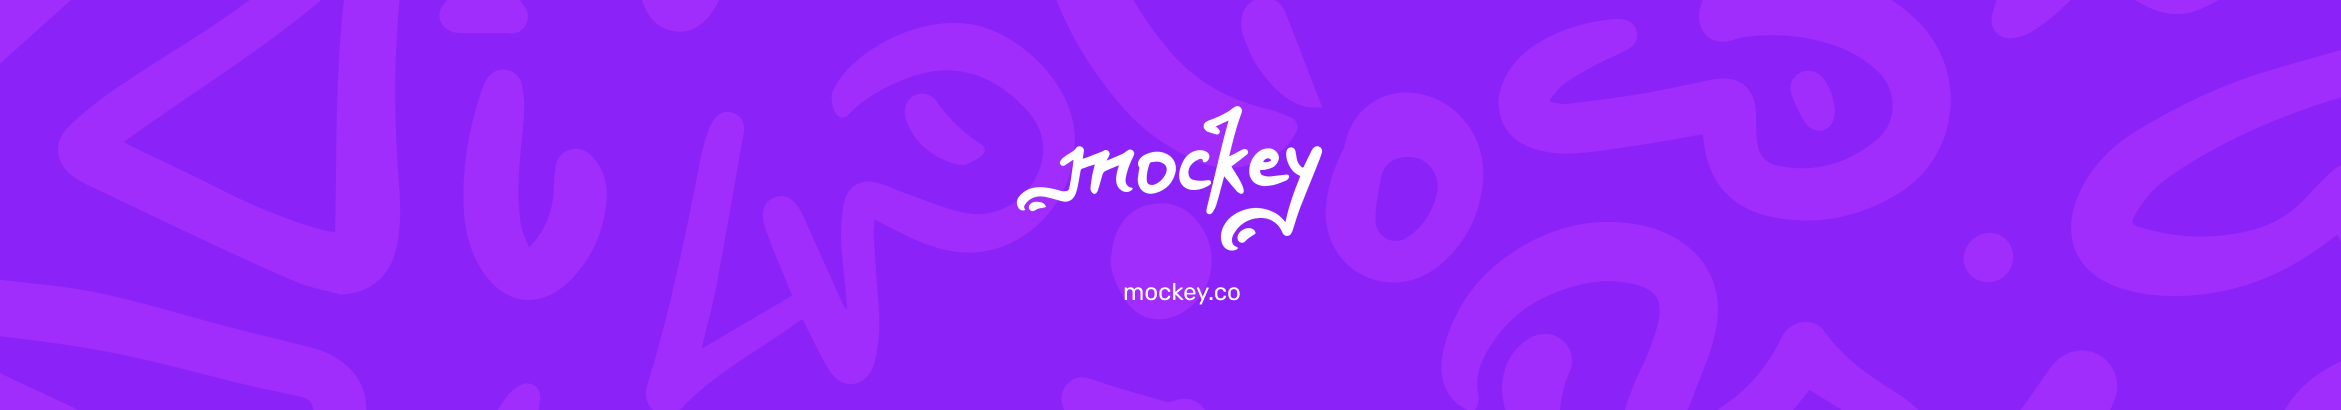 Mockey ai's profile banner